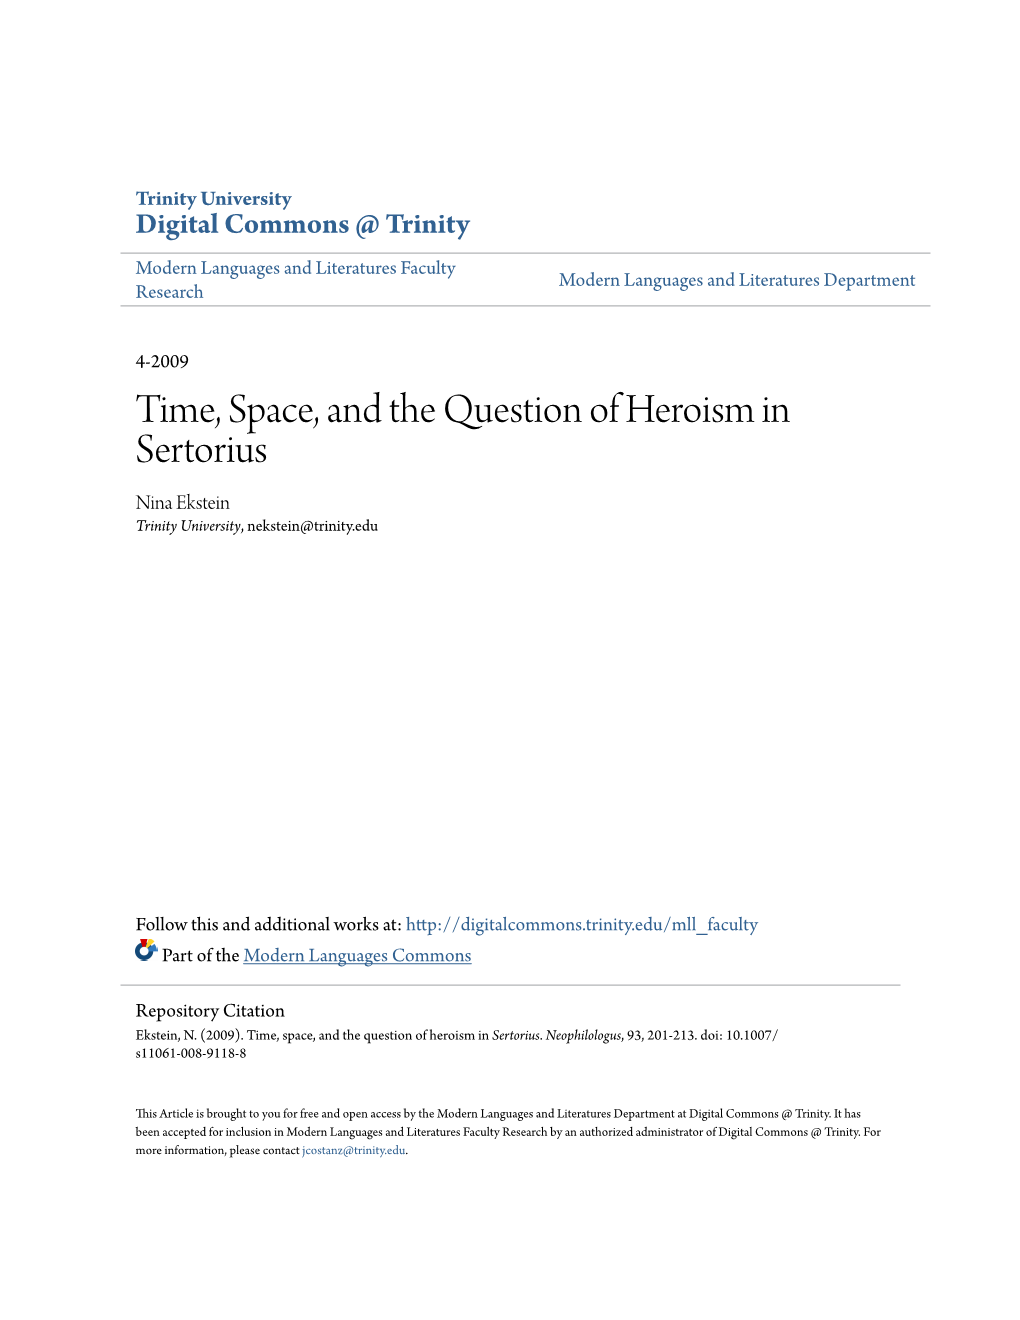 Time, Space, and the Question of Heroism in Sertorius Nina Ekstein Trinity University, Nekstein@Trinity.Edu